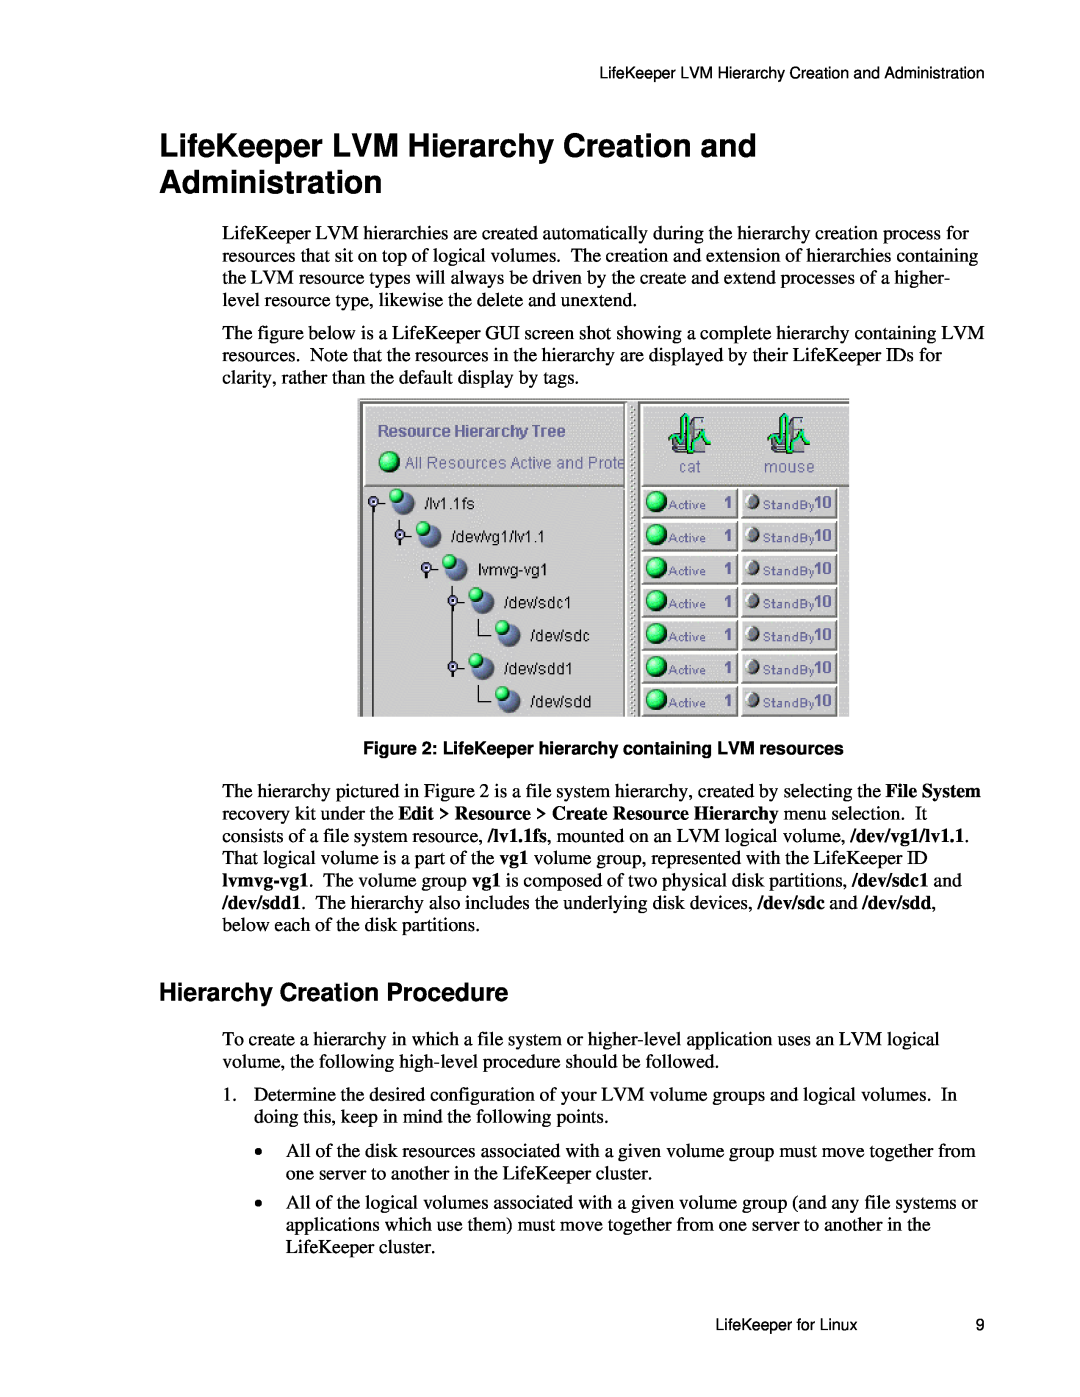 SteelEye 4.5.0 manual LifeKeeper LVM Hierarchy Creation and Administration, Hierarchy Creation Procedure 